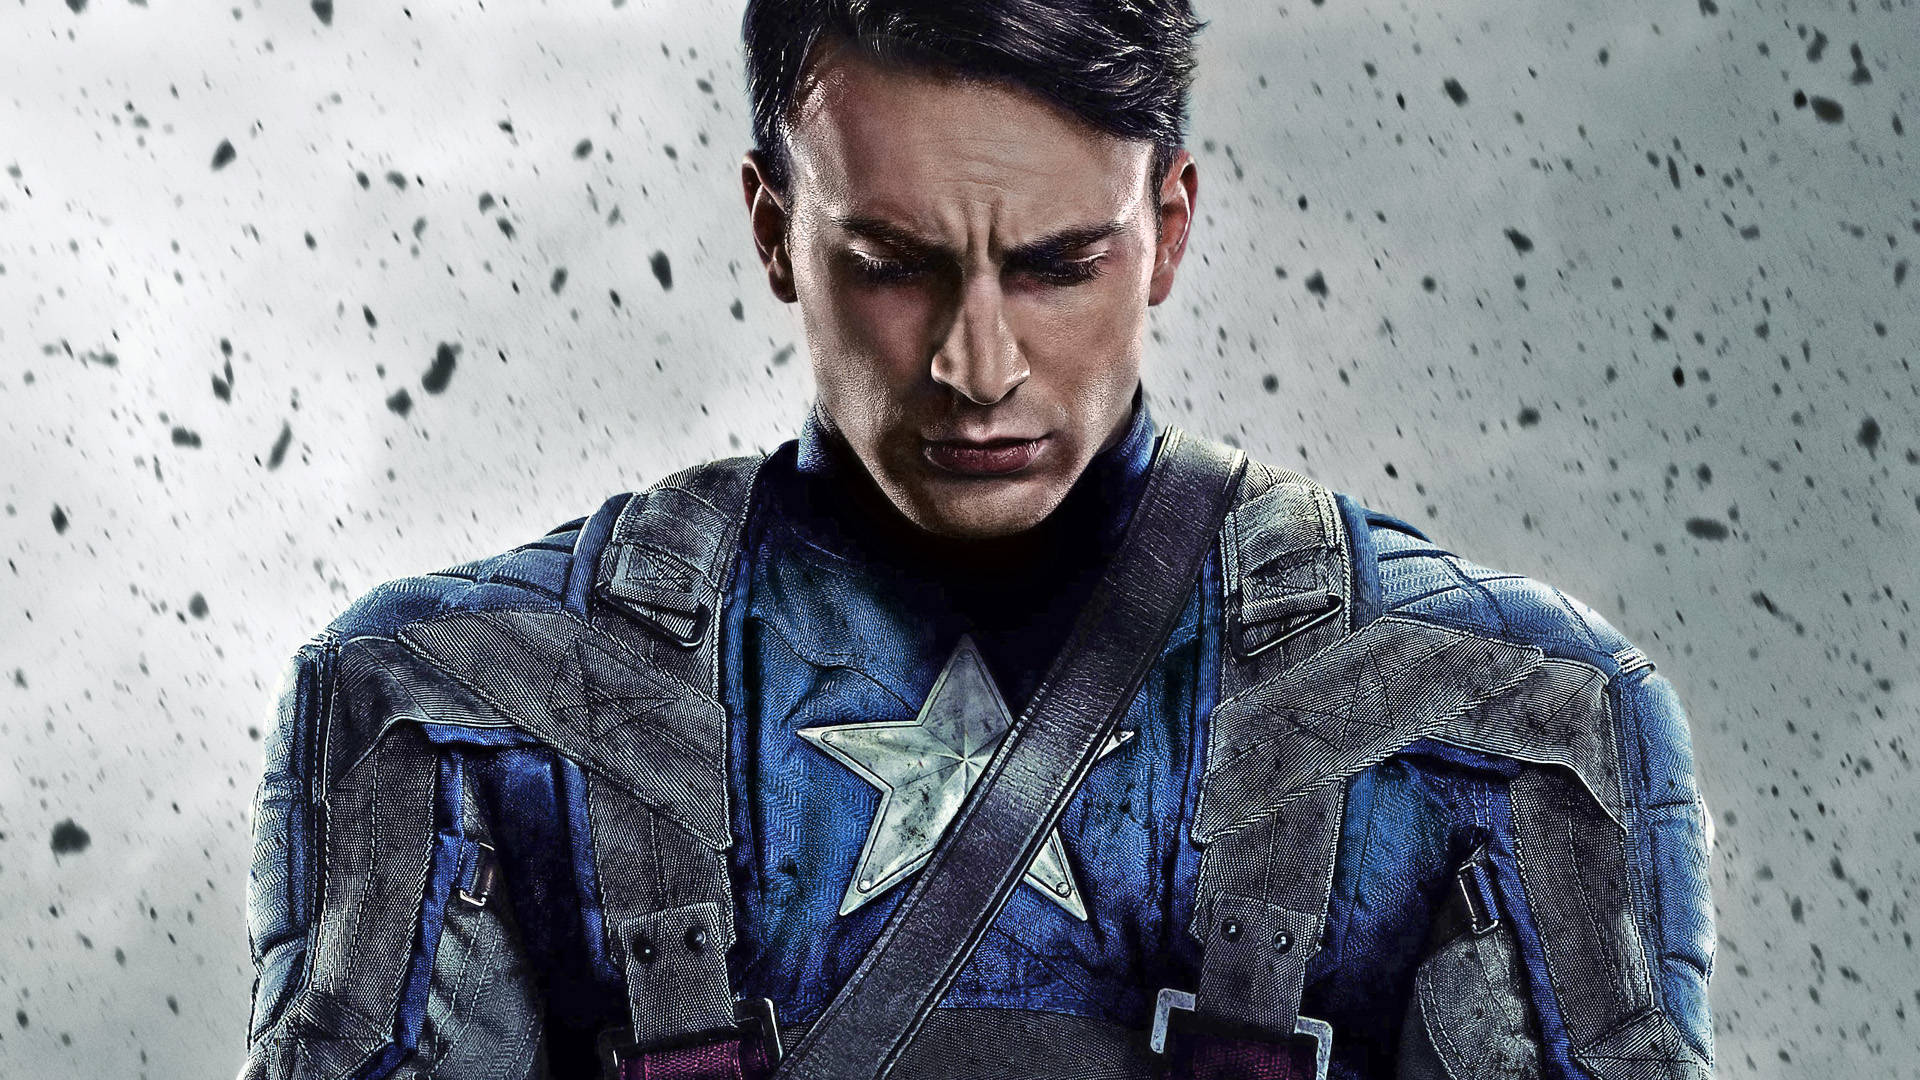 Captain America Superhero The First Avenger Movie Background